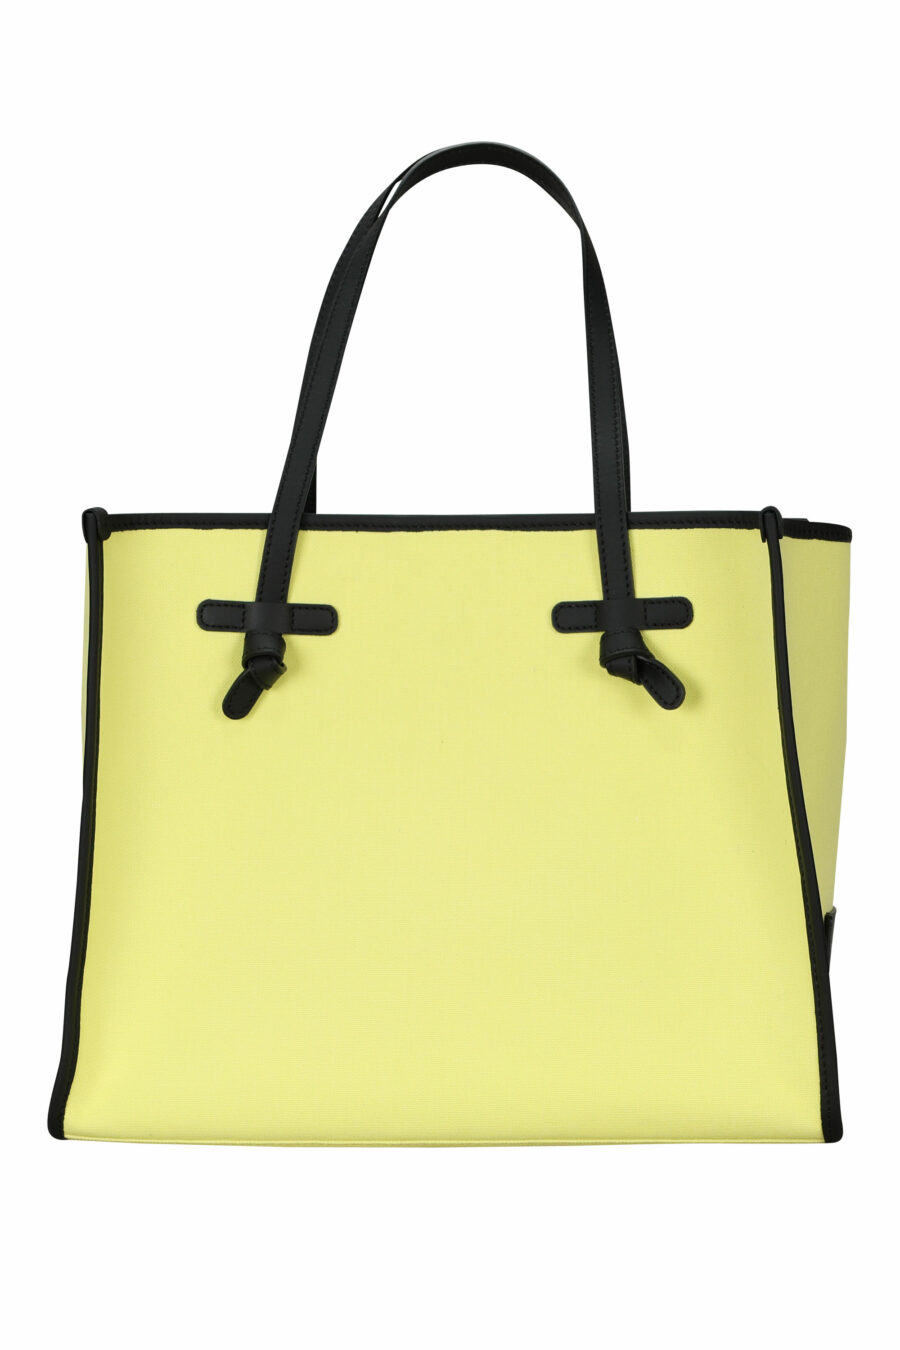 Shopper bag "Marcella" lime green and minilogo - 8057145223520